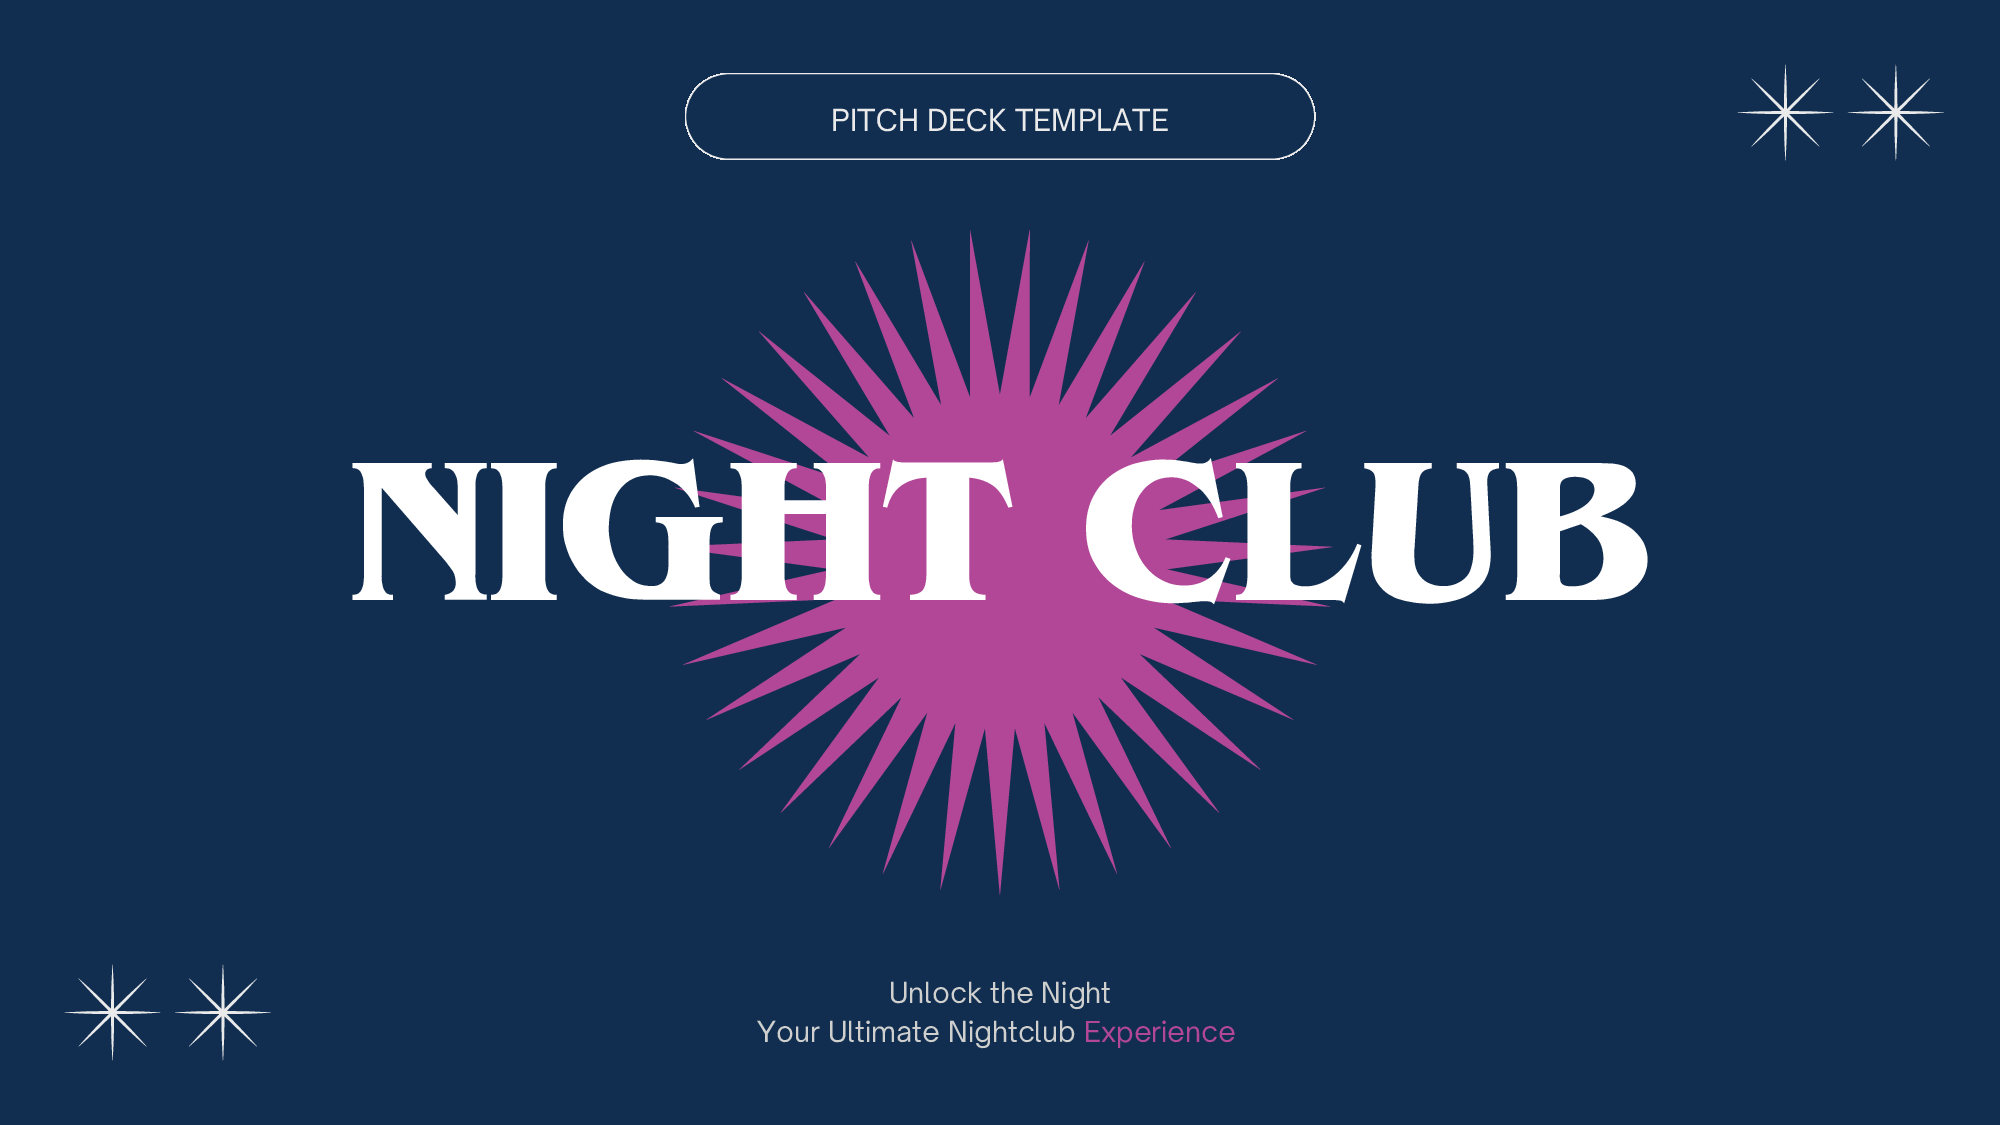 Night Club Pitch Deck Template